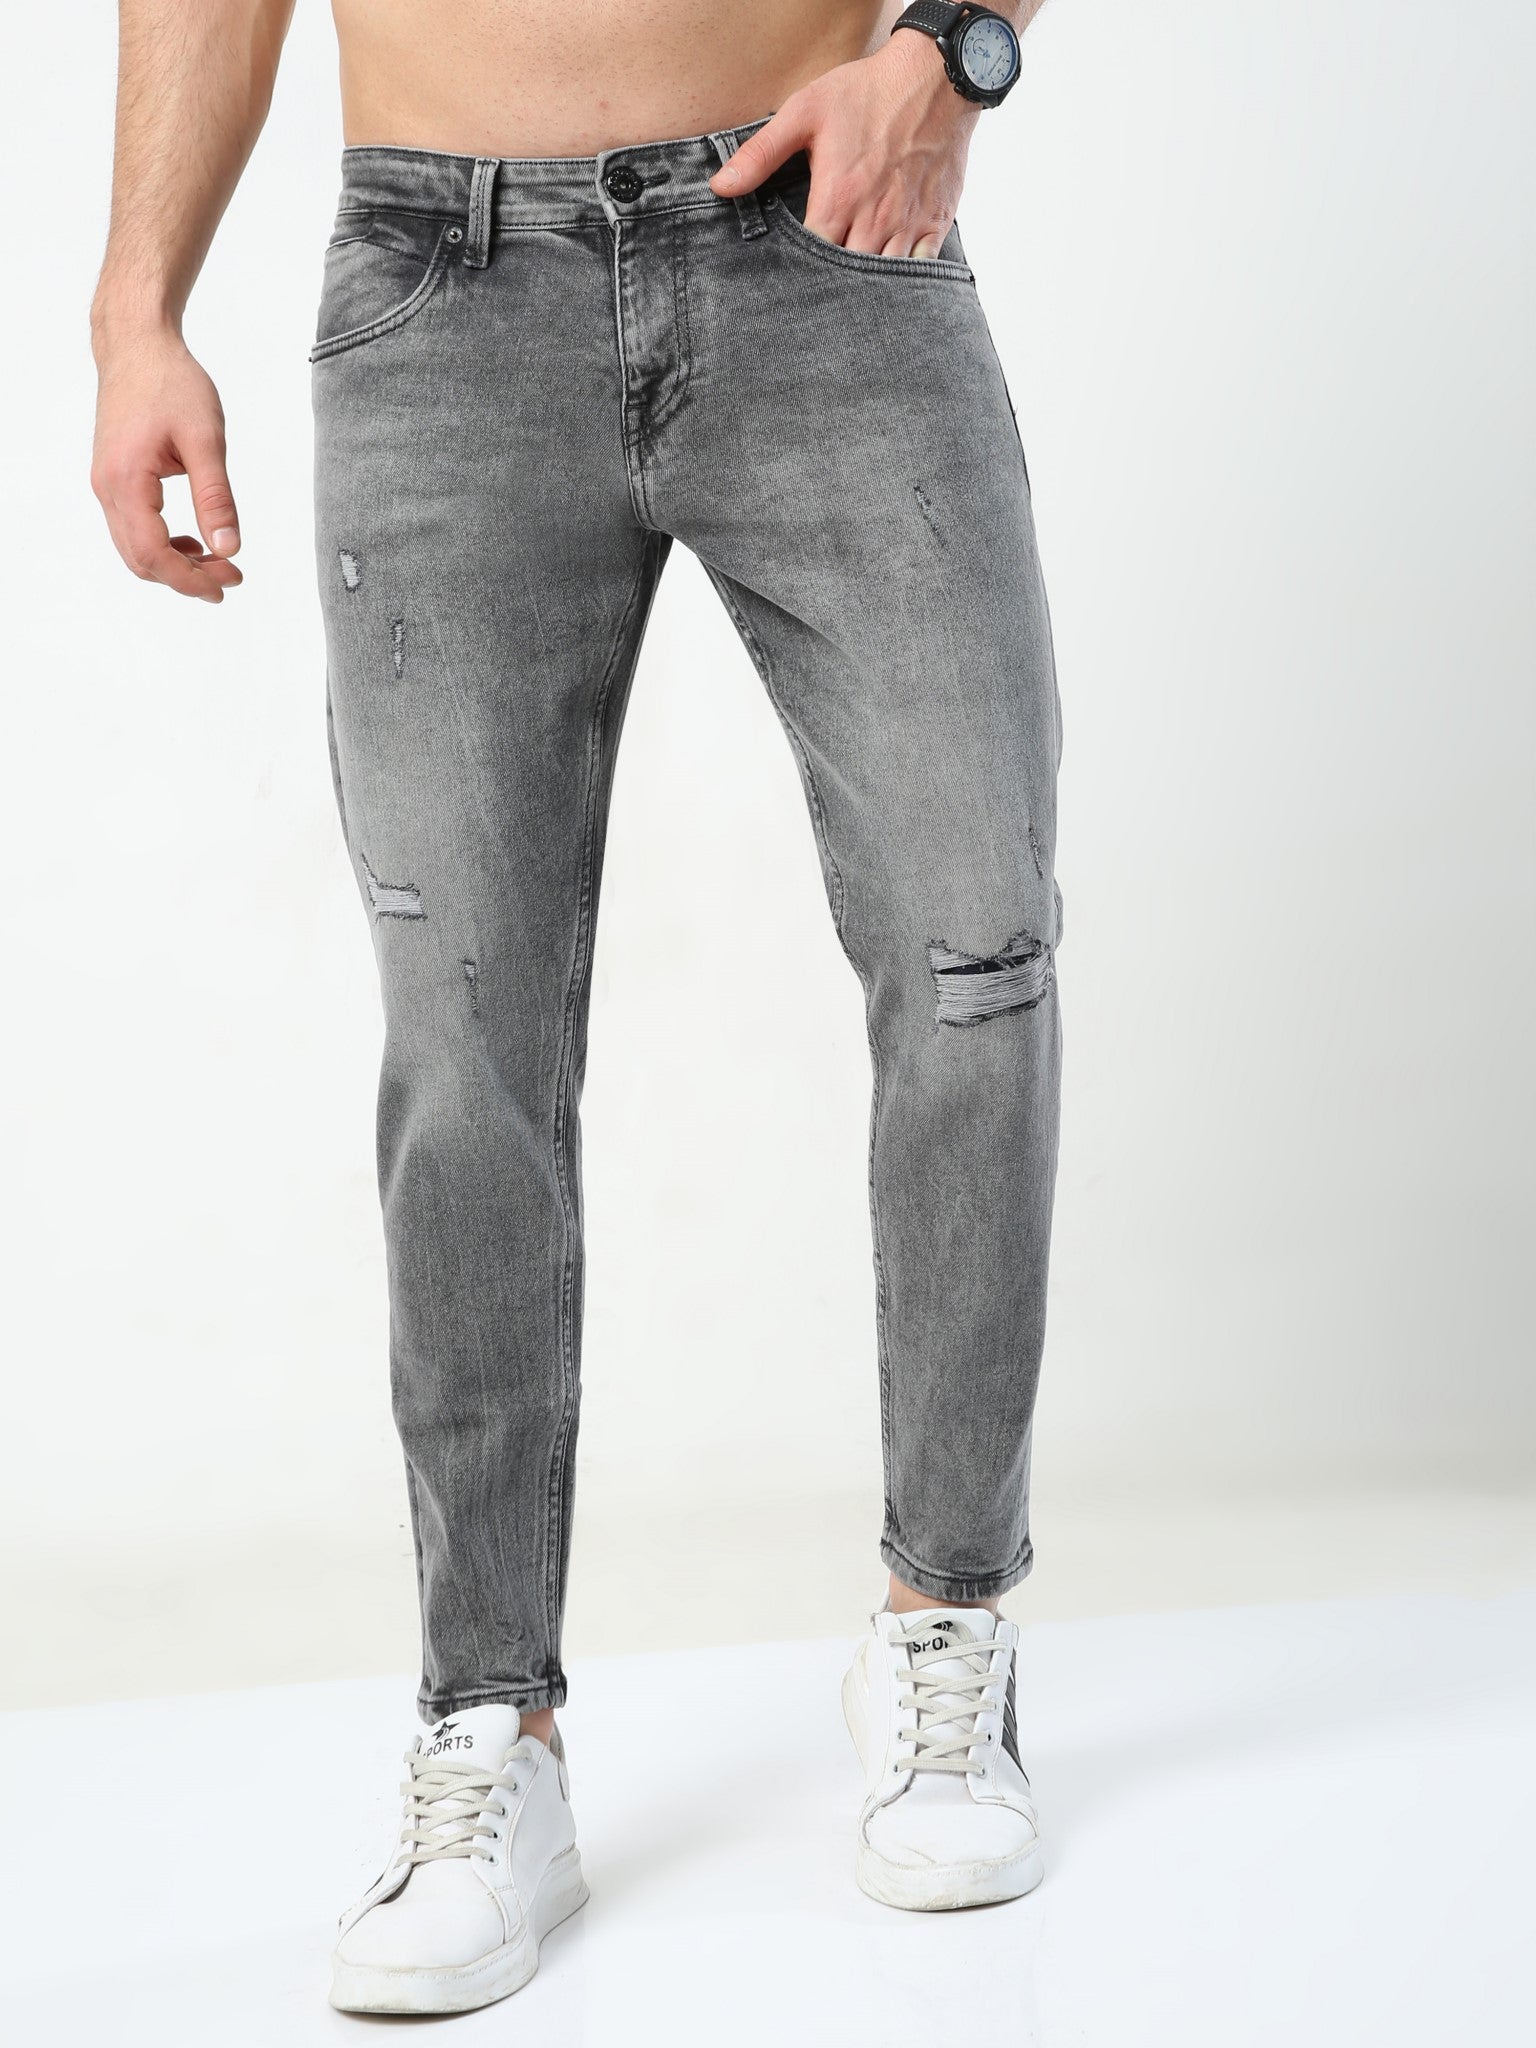 Graphite Grey Skinny Jeans